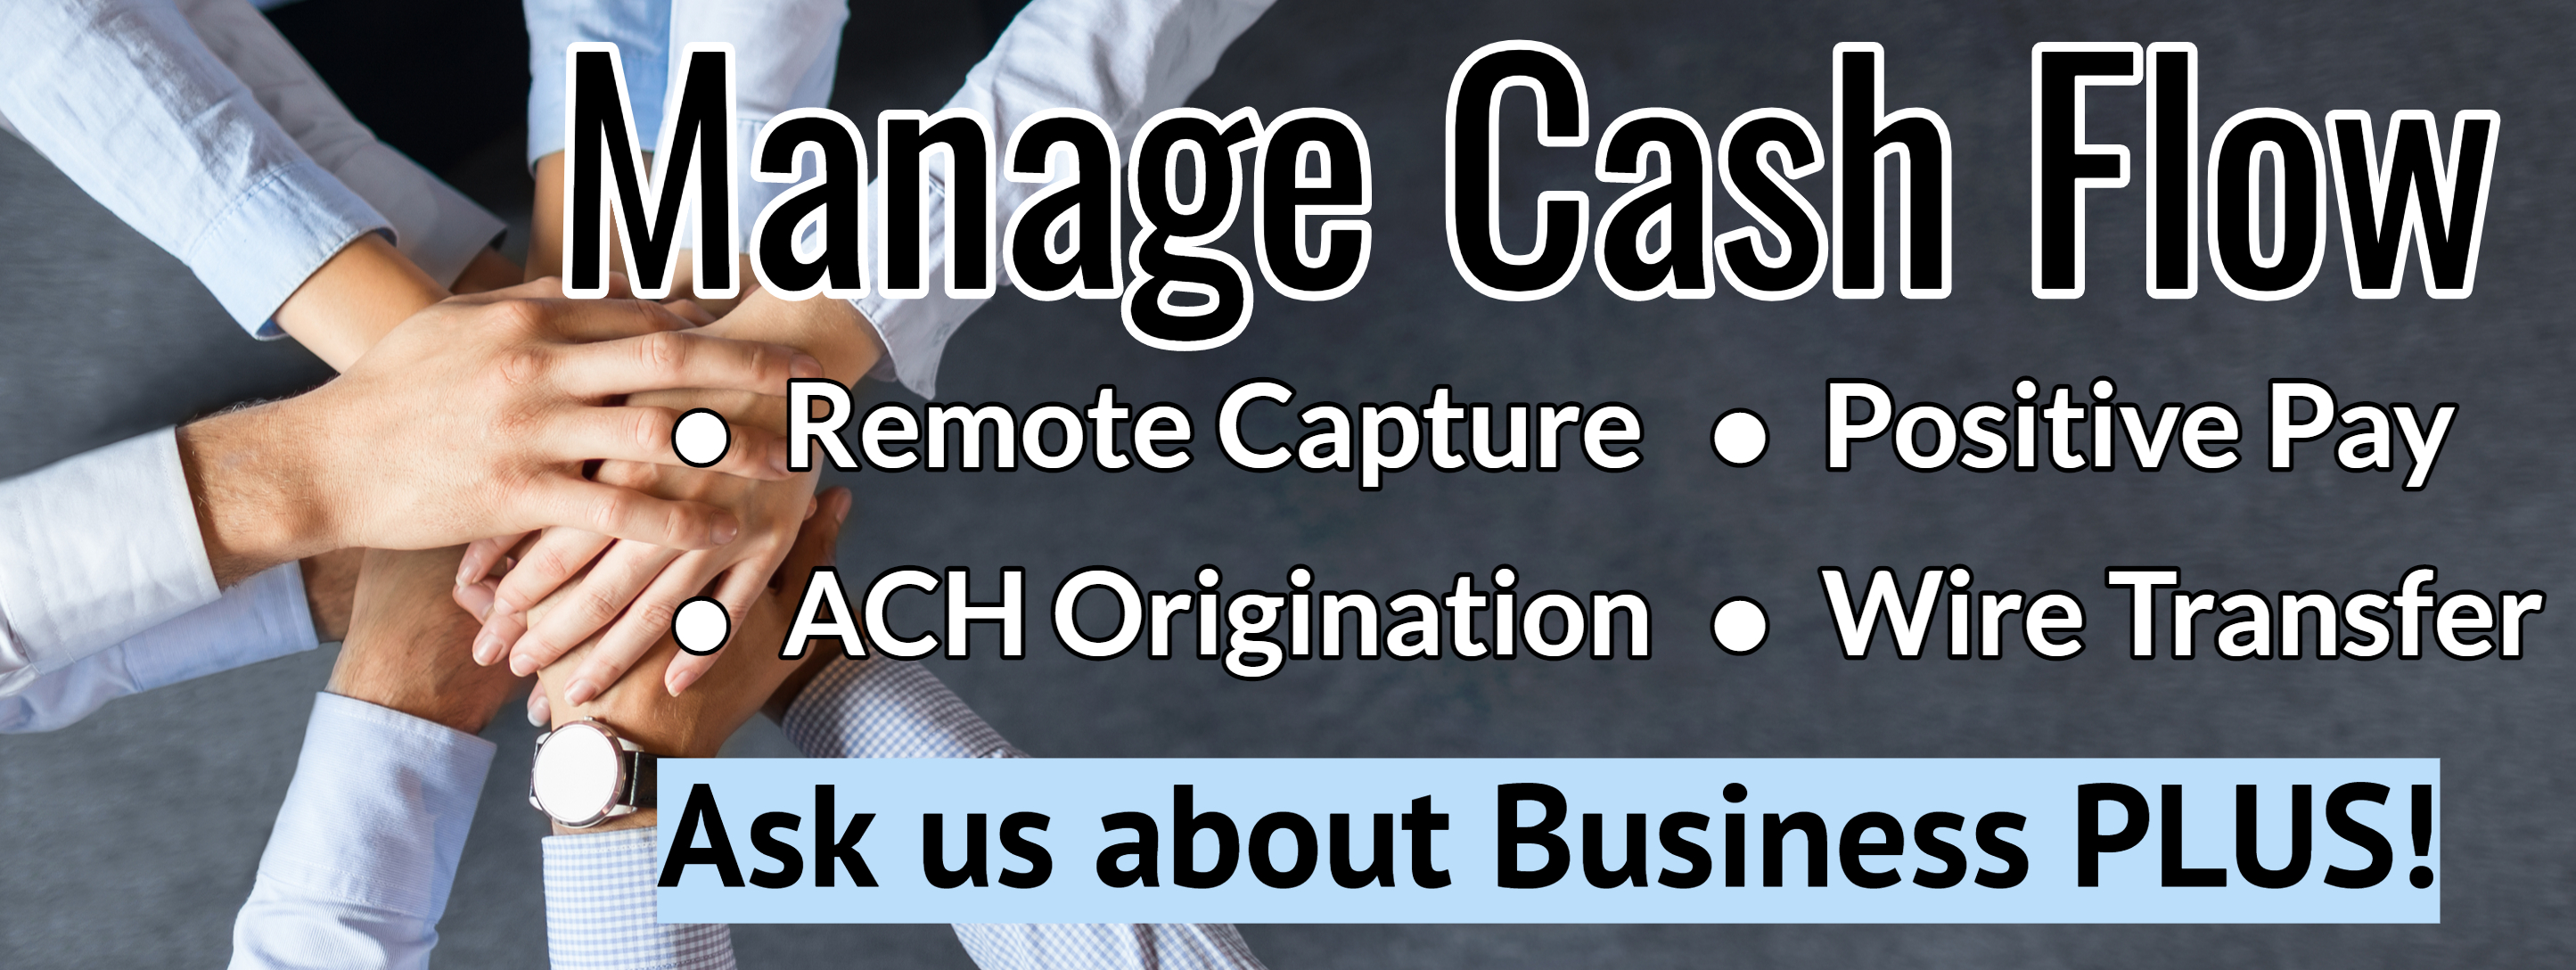 Manage cash flow Remote Capture Positive Pay ACH Origination Wire Transfer Ask us about business plus!